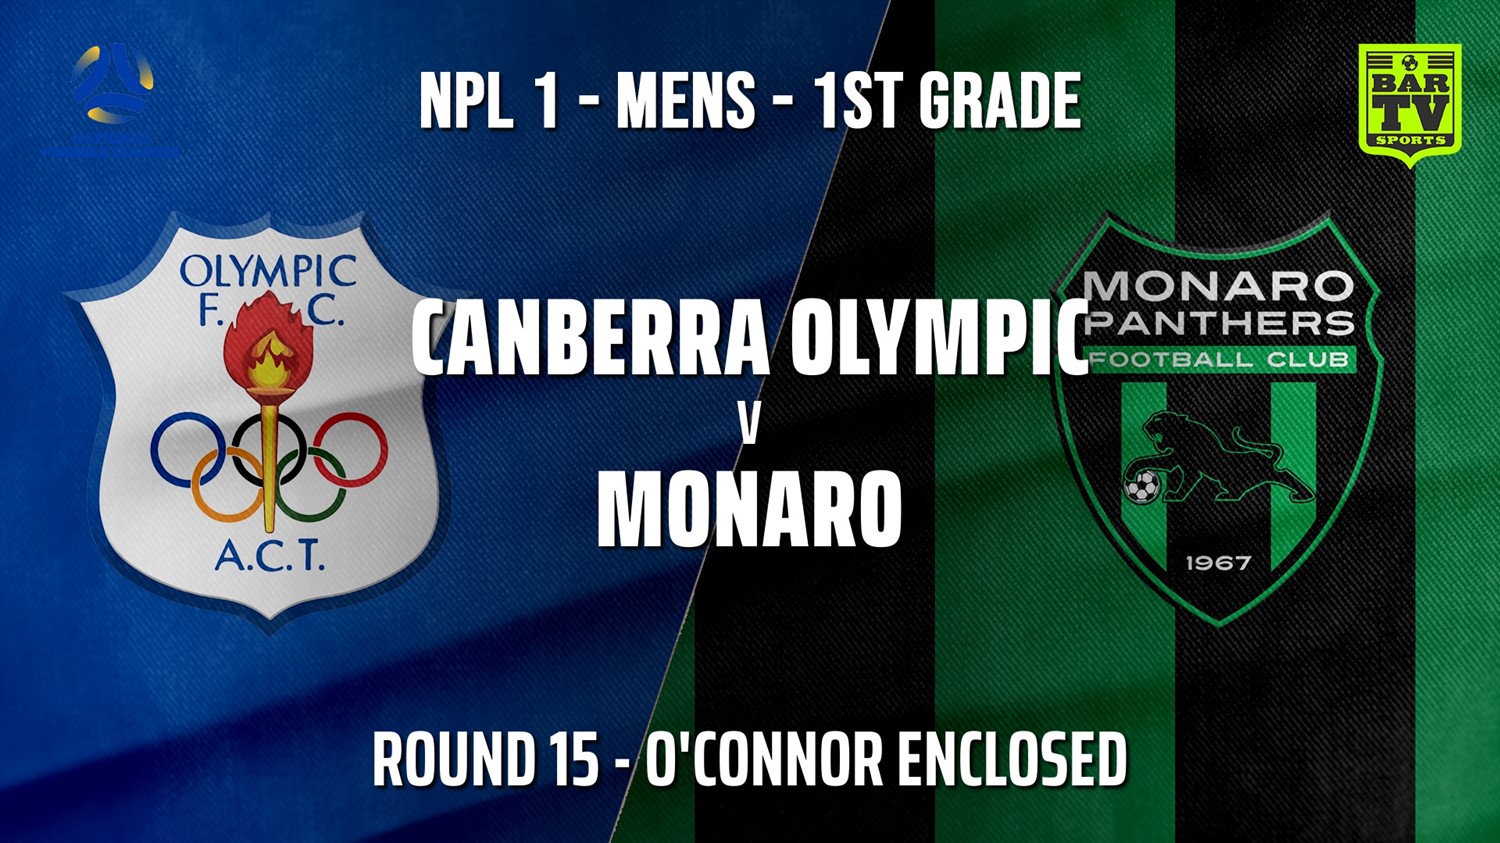 210724-Capital NPL Round 15 - Canberra Olympic FC v Monaro Panthers FC Minigame Slate Image